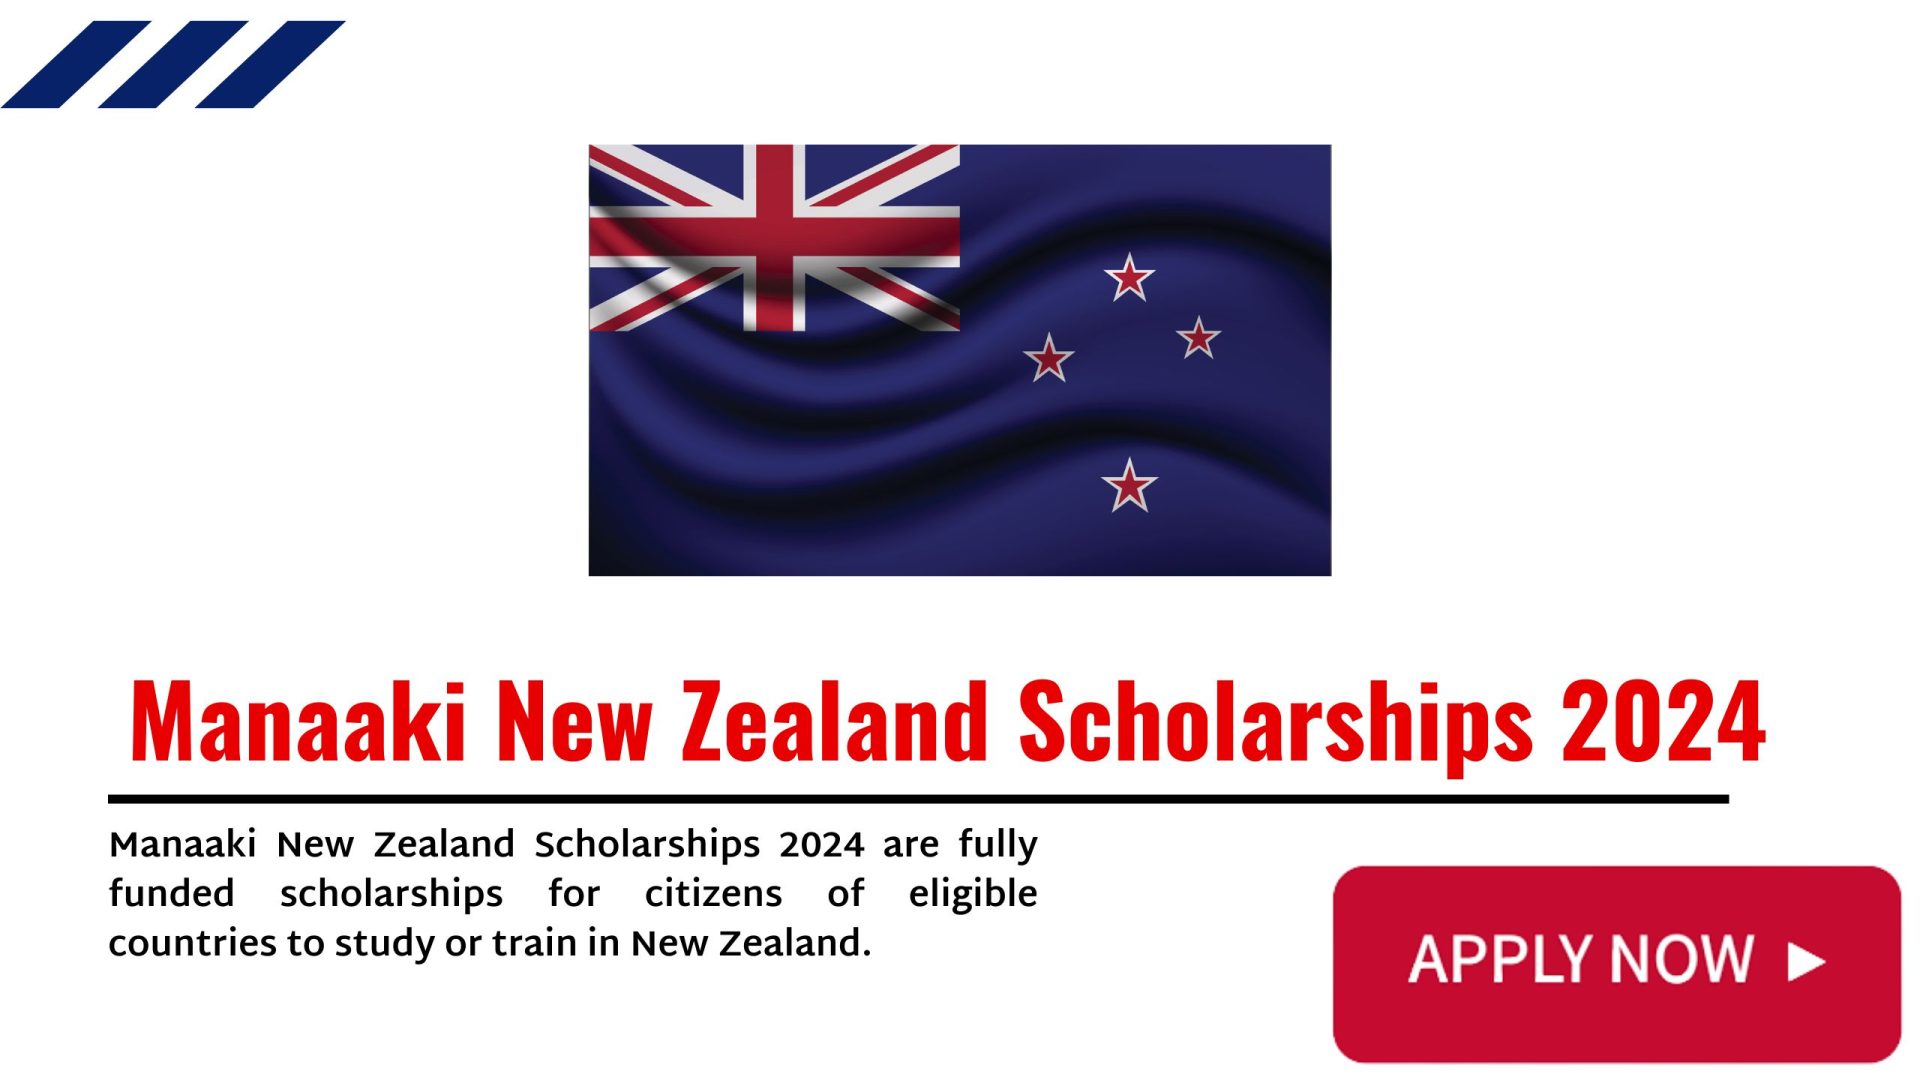 Manaaki New Zealand Scholarships 2024  1920x1080 